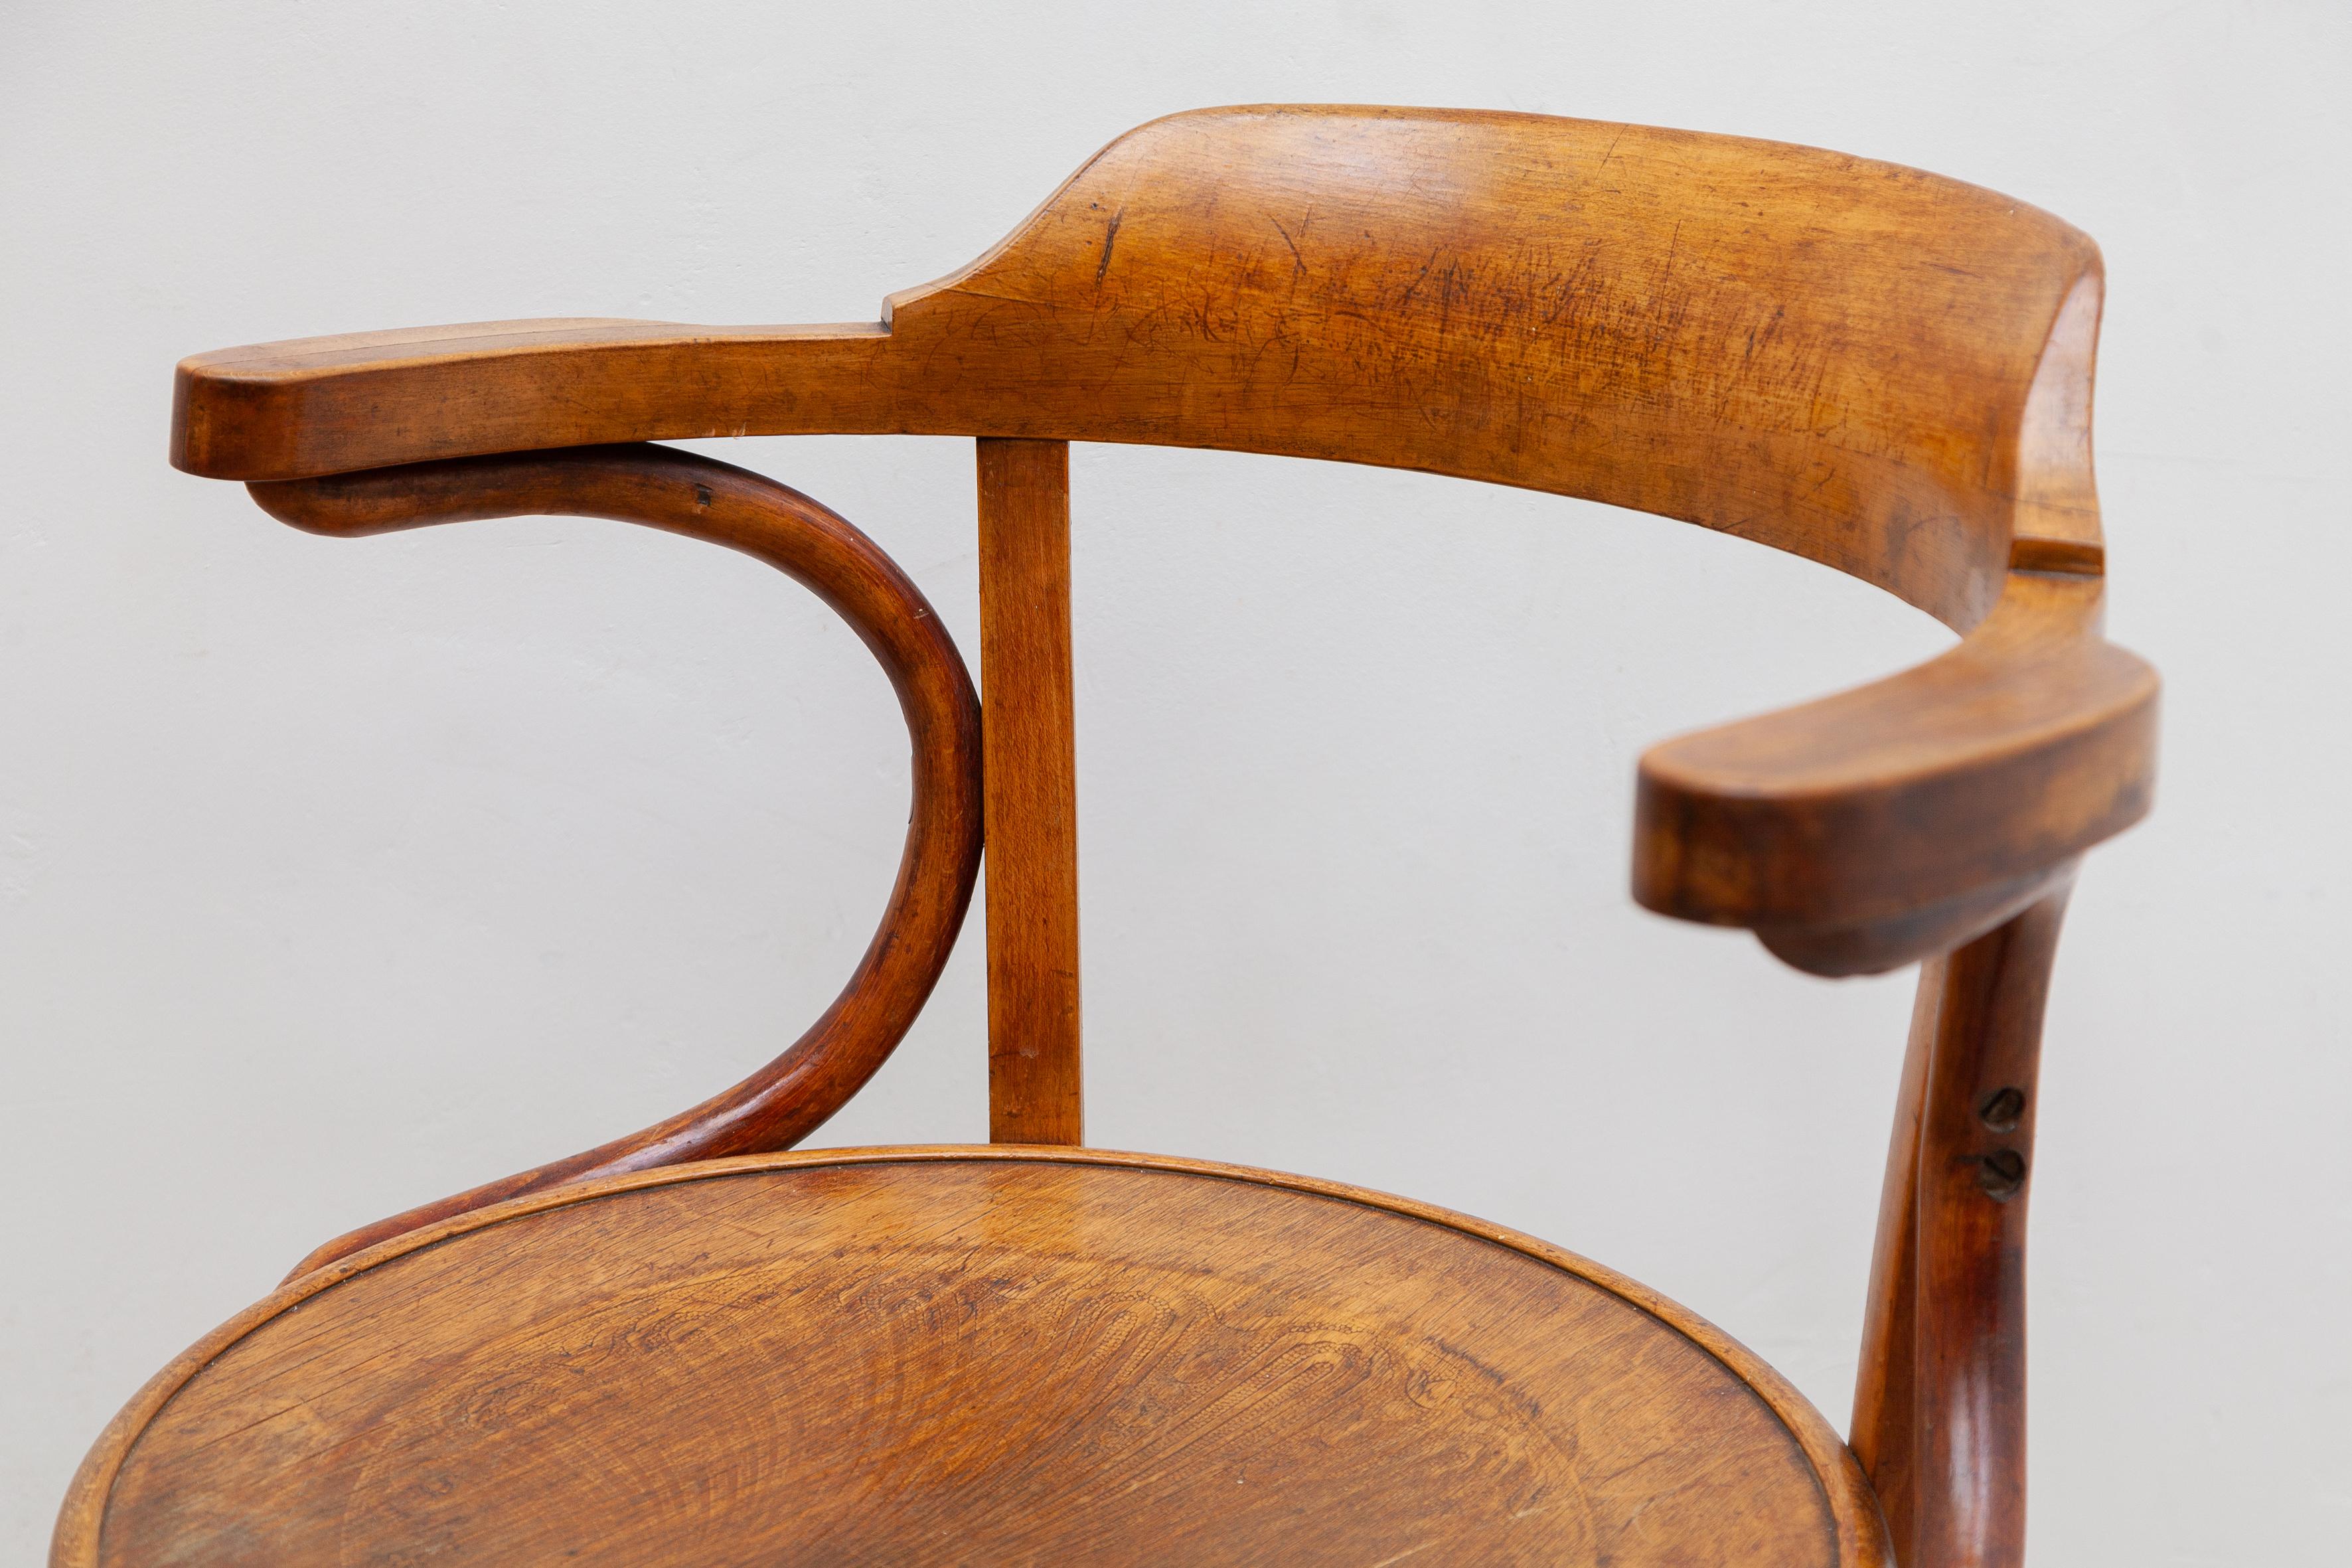 Art Nouveau Iconic Thonet Chair Designed by Gebrüder Thonet Company